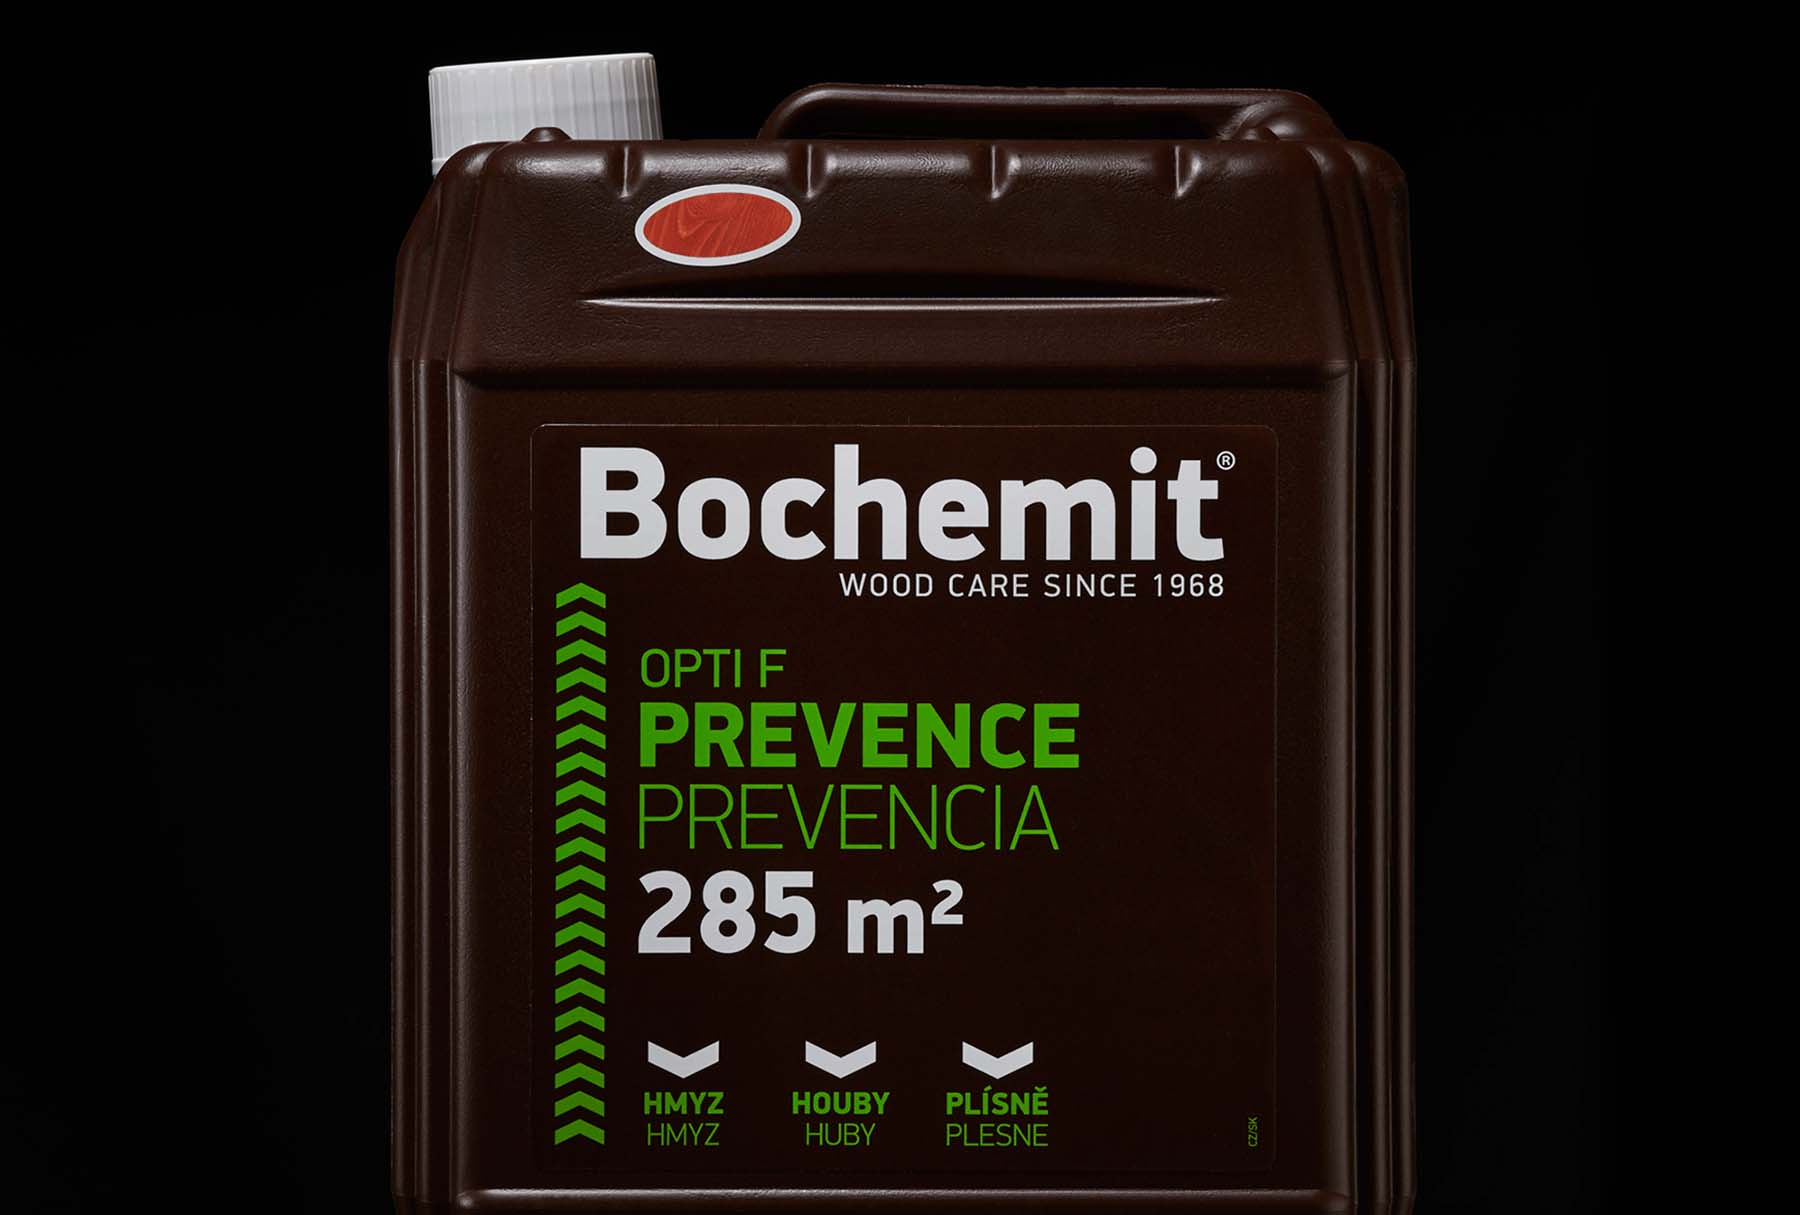 Bochemit redesign